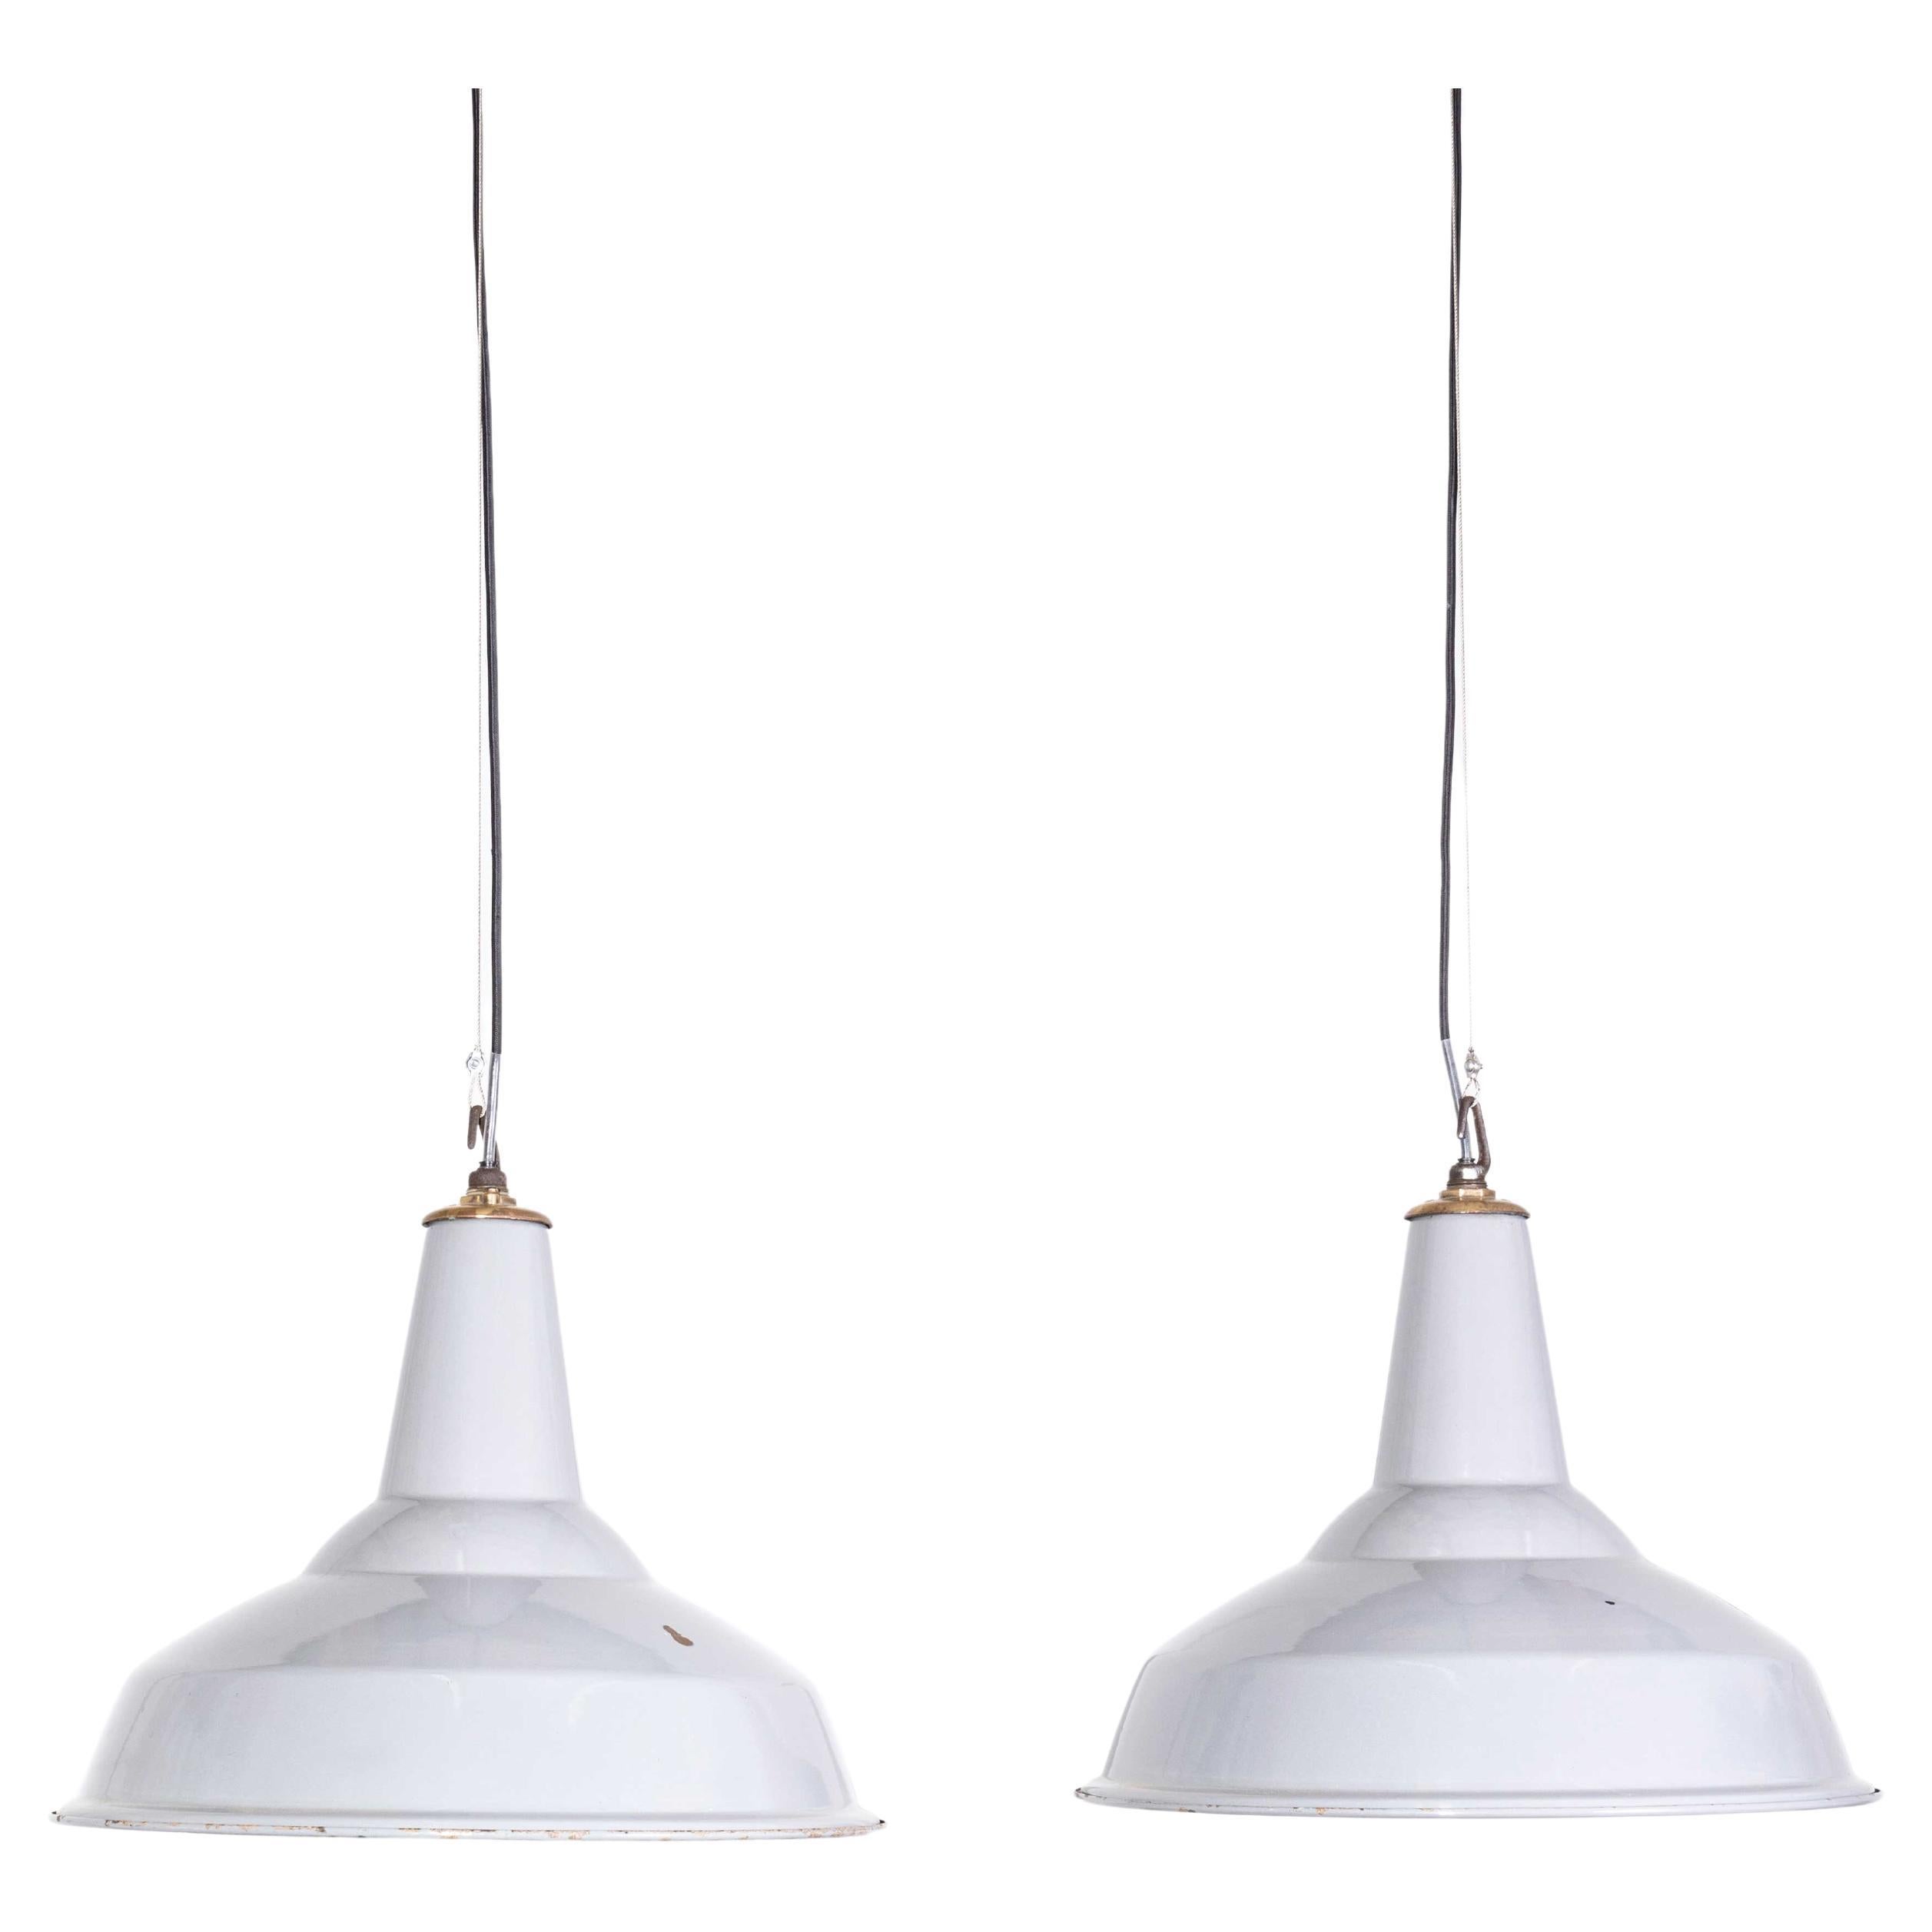 1950's Industrial Benjamin Enamelled Pendant Lamps 16 Inch - Pair